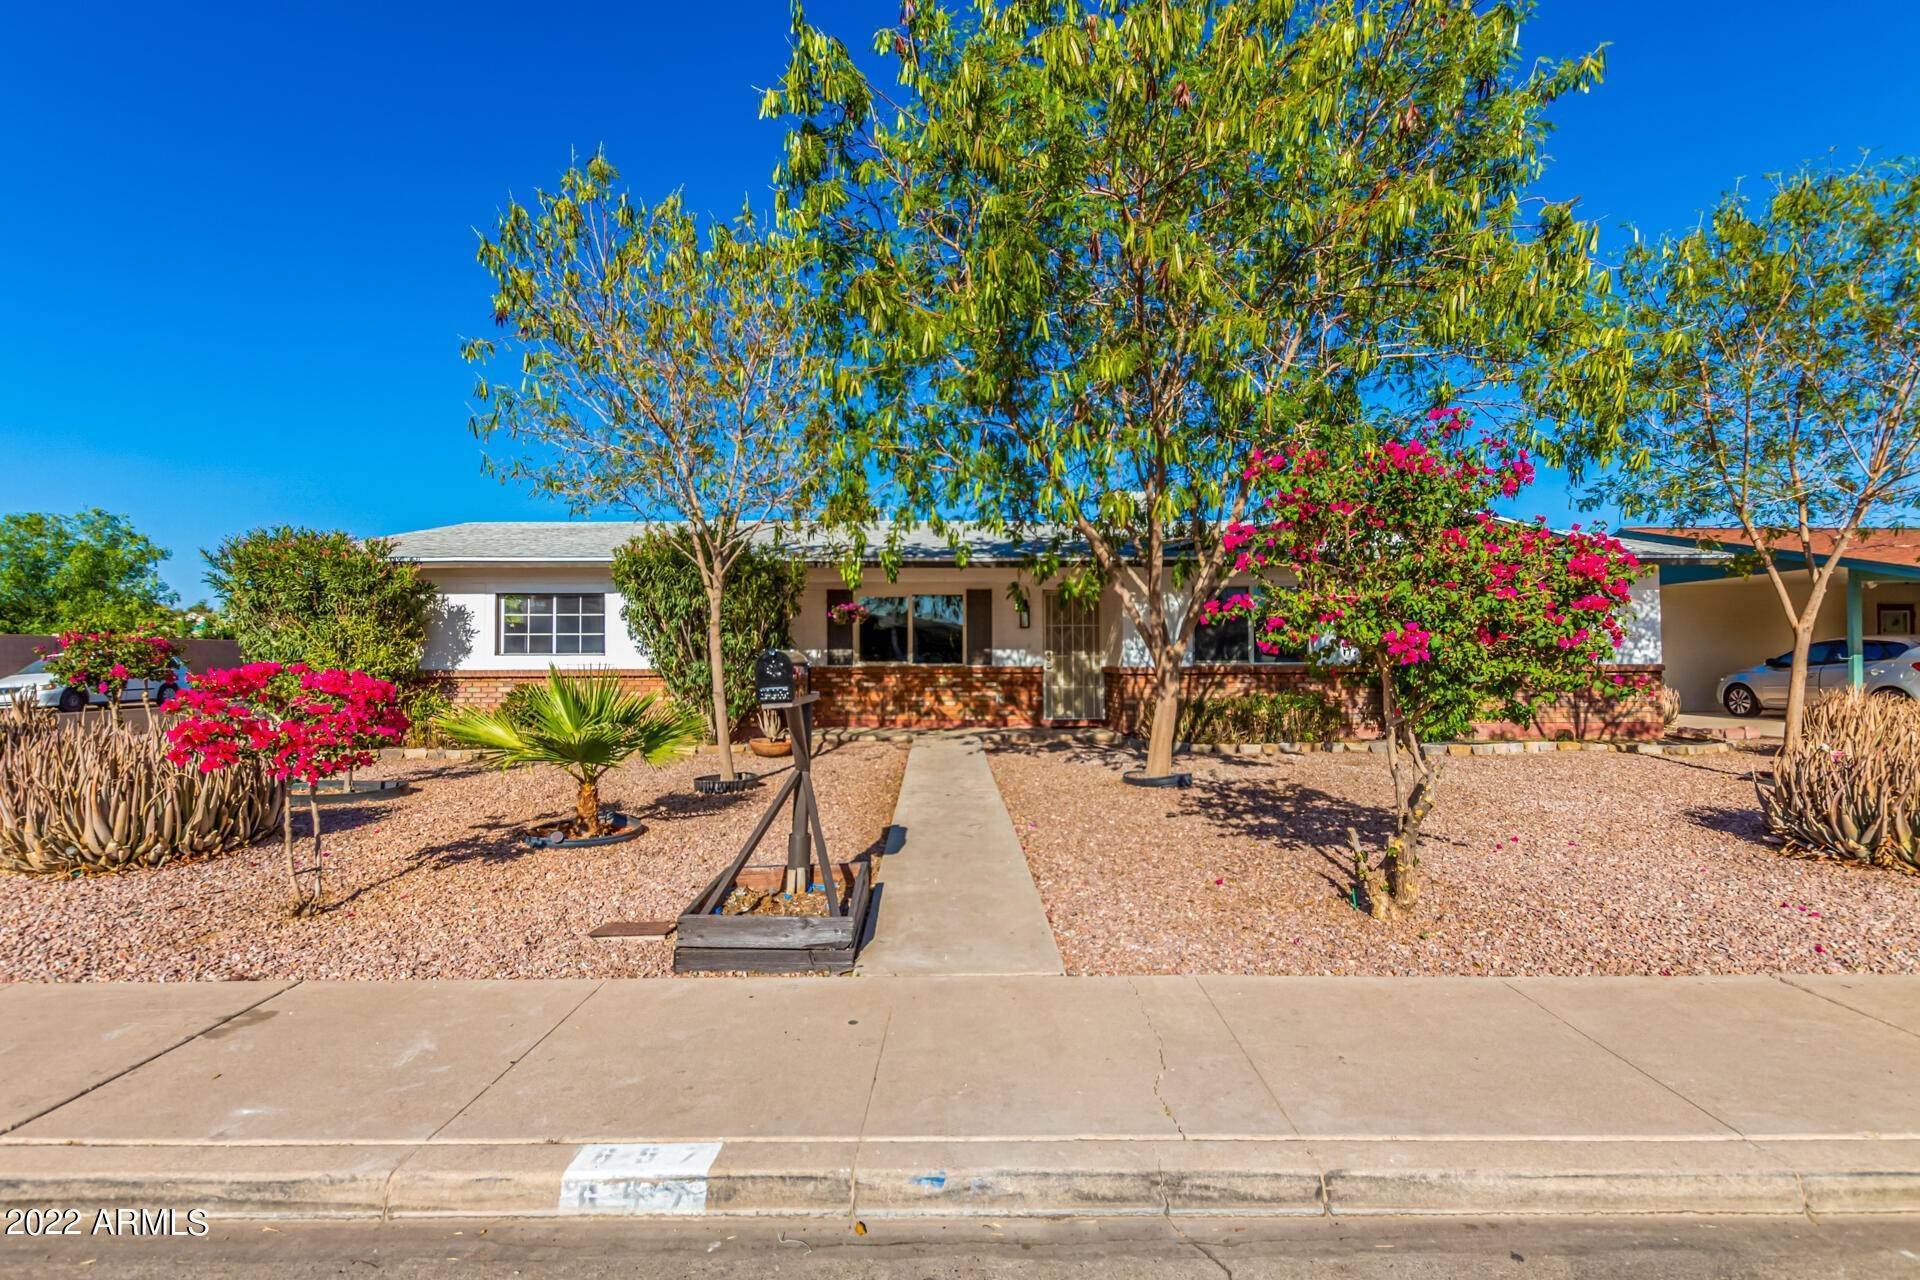 1. Single Family for Sale at Mesa, AZ 85204